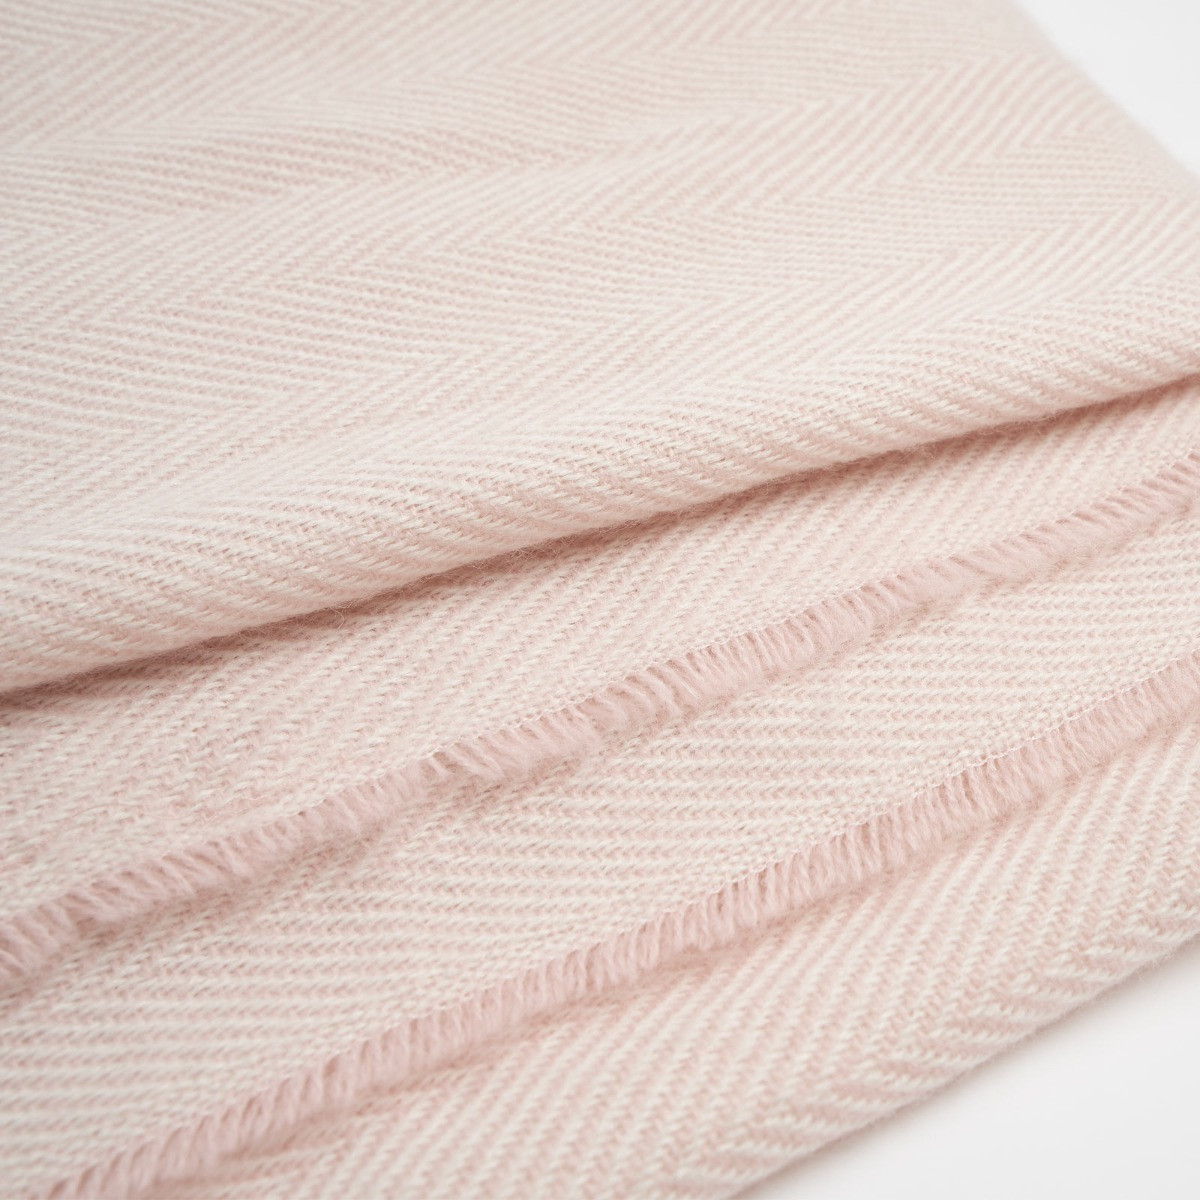 Highams Acrylic Stripe Chevron Fleece Throw, Blush - 150 x 200cm>